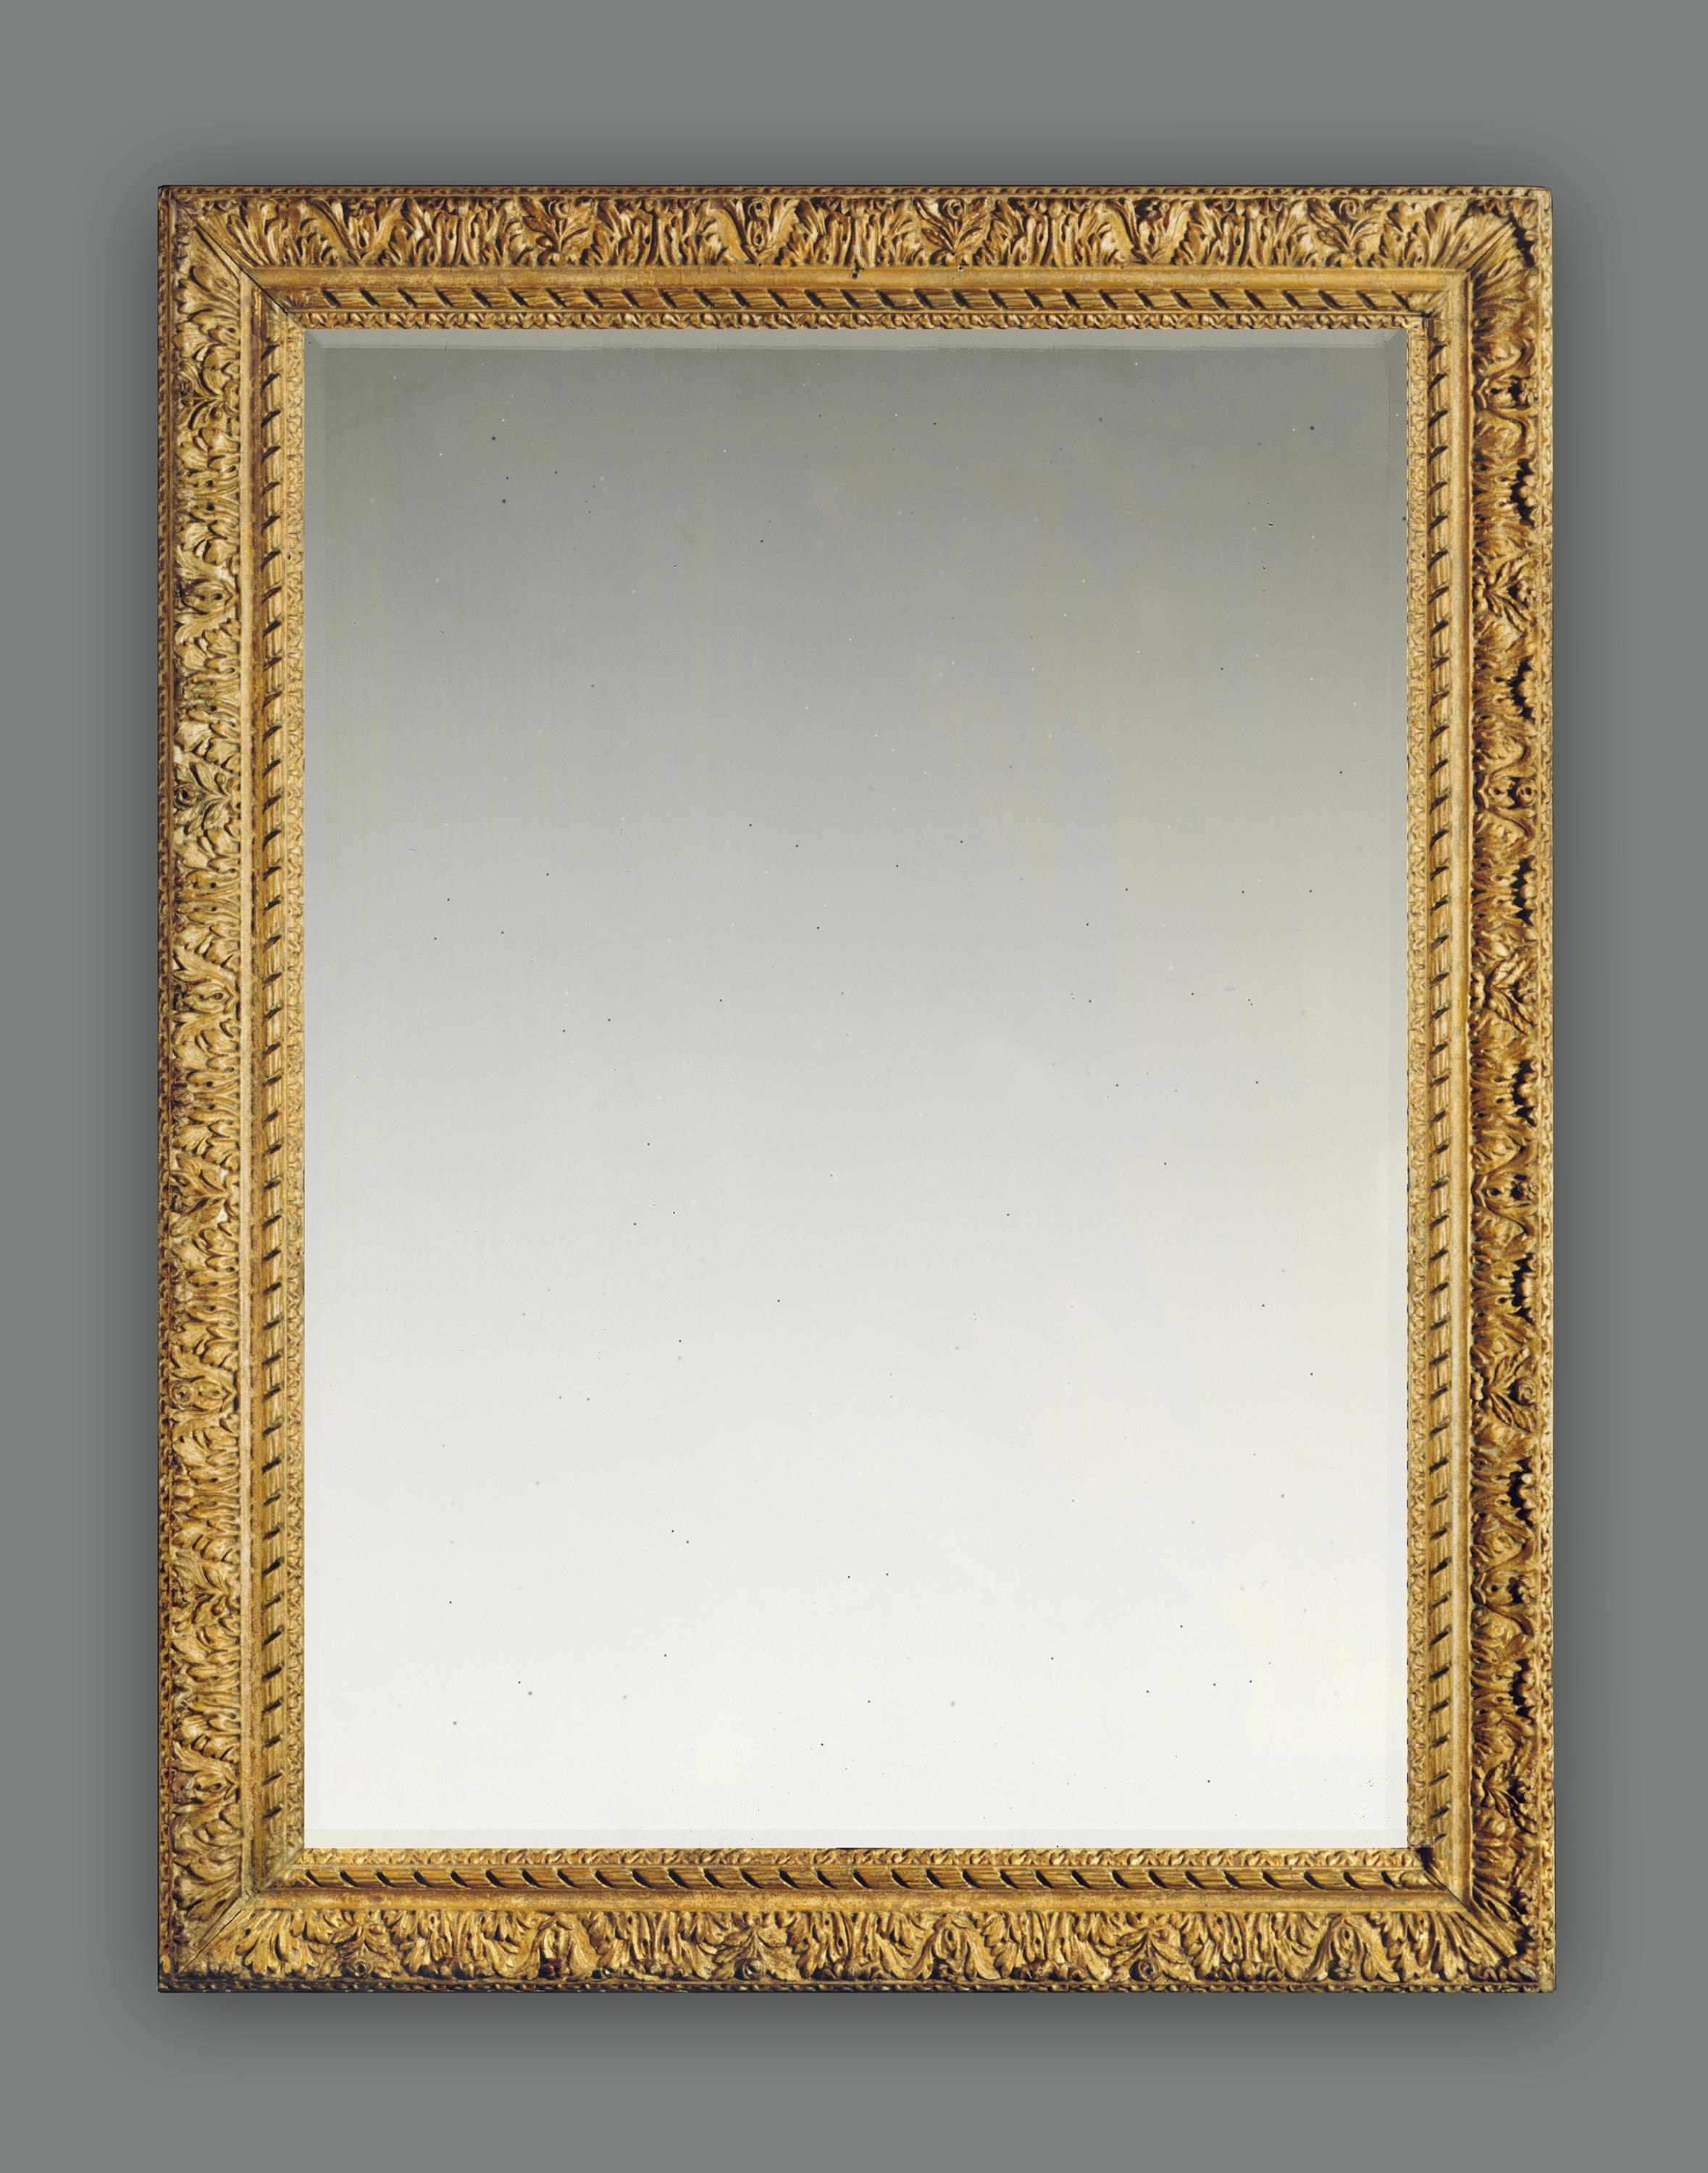 17th century frame